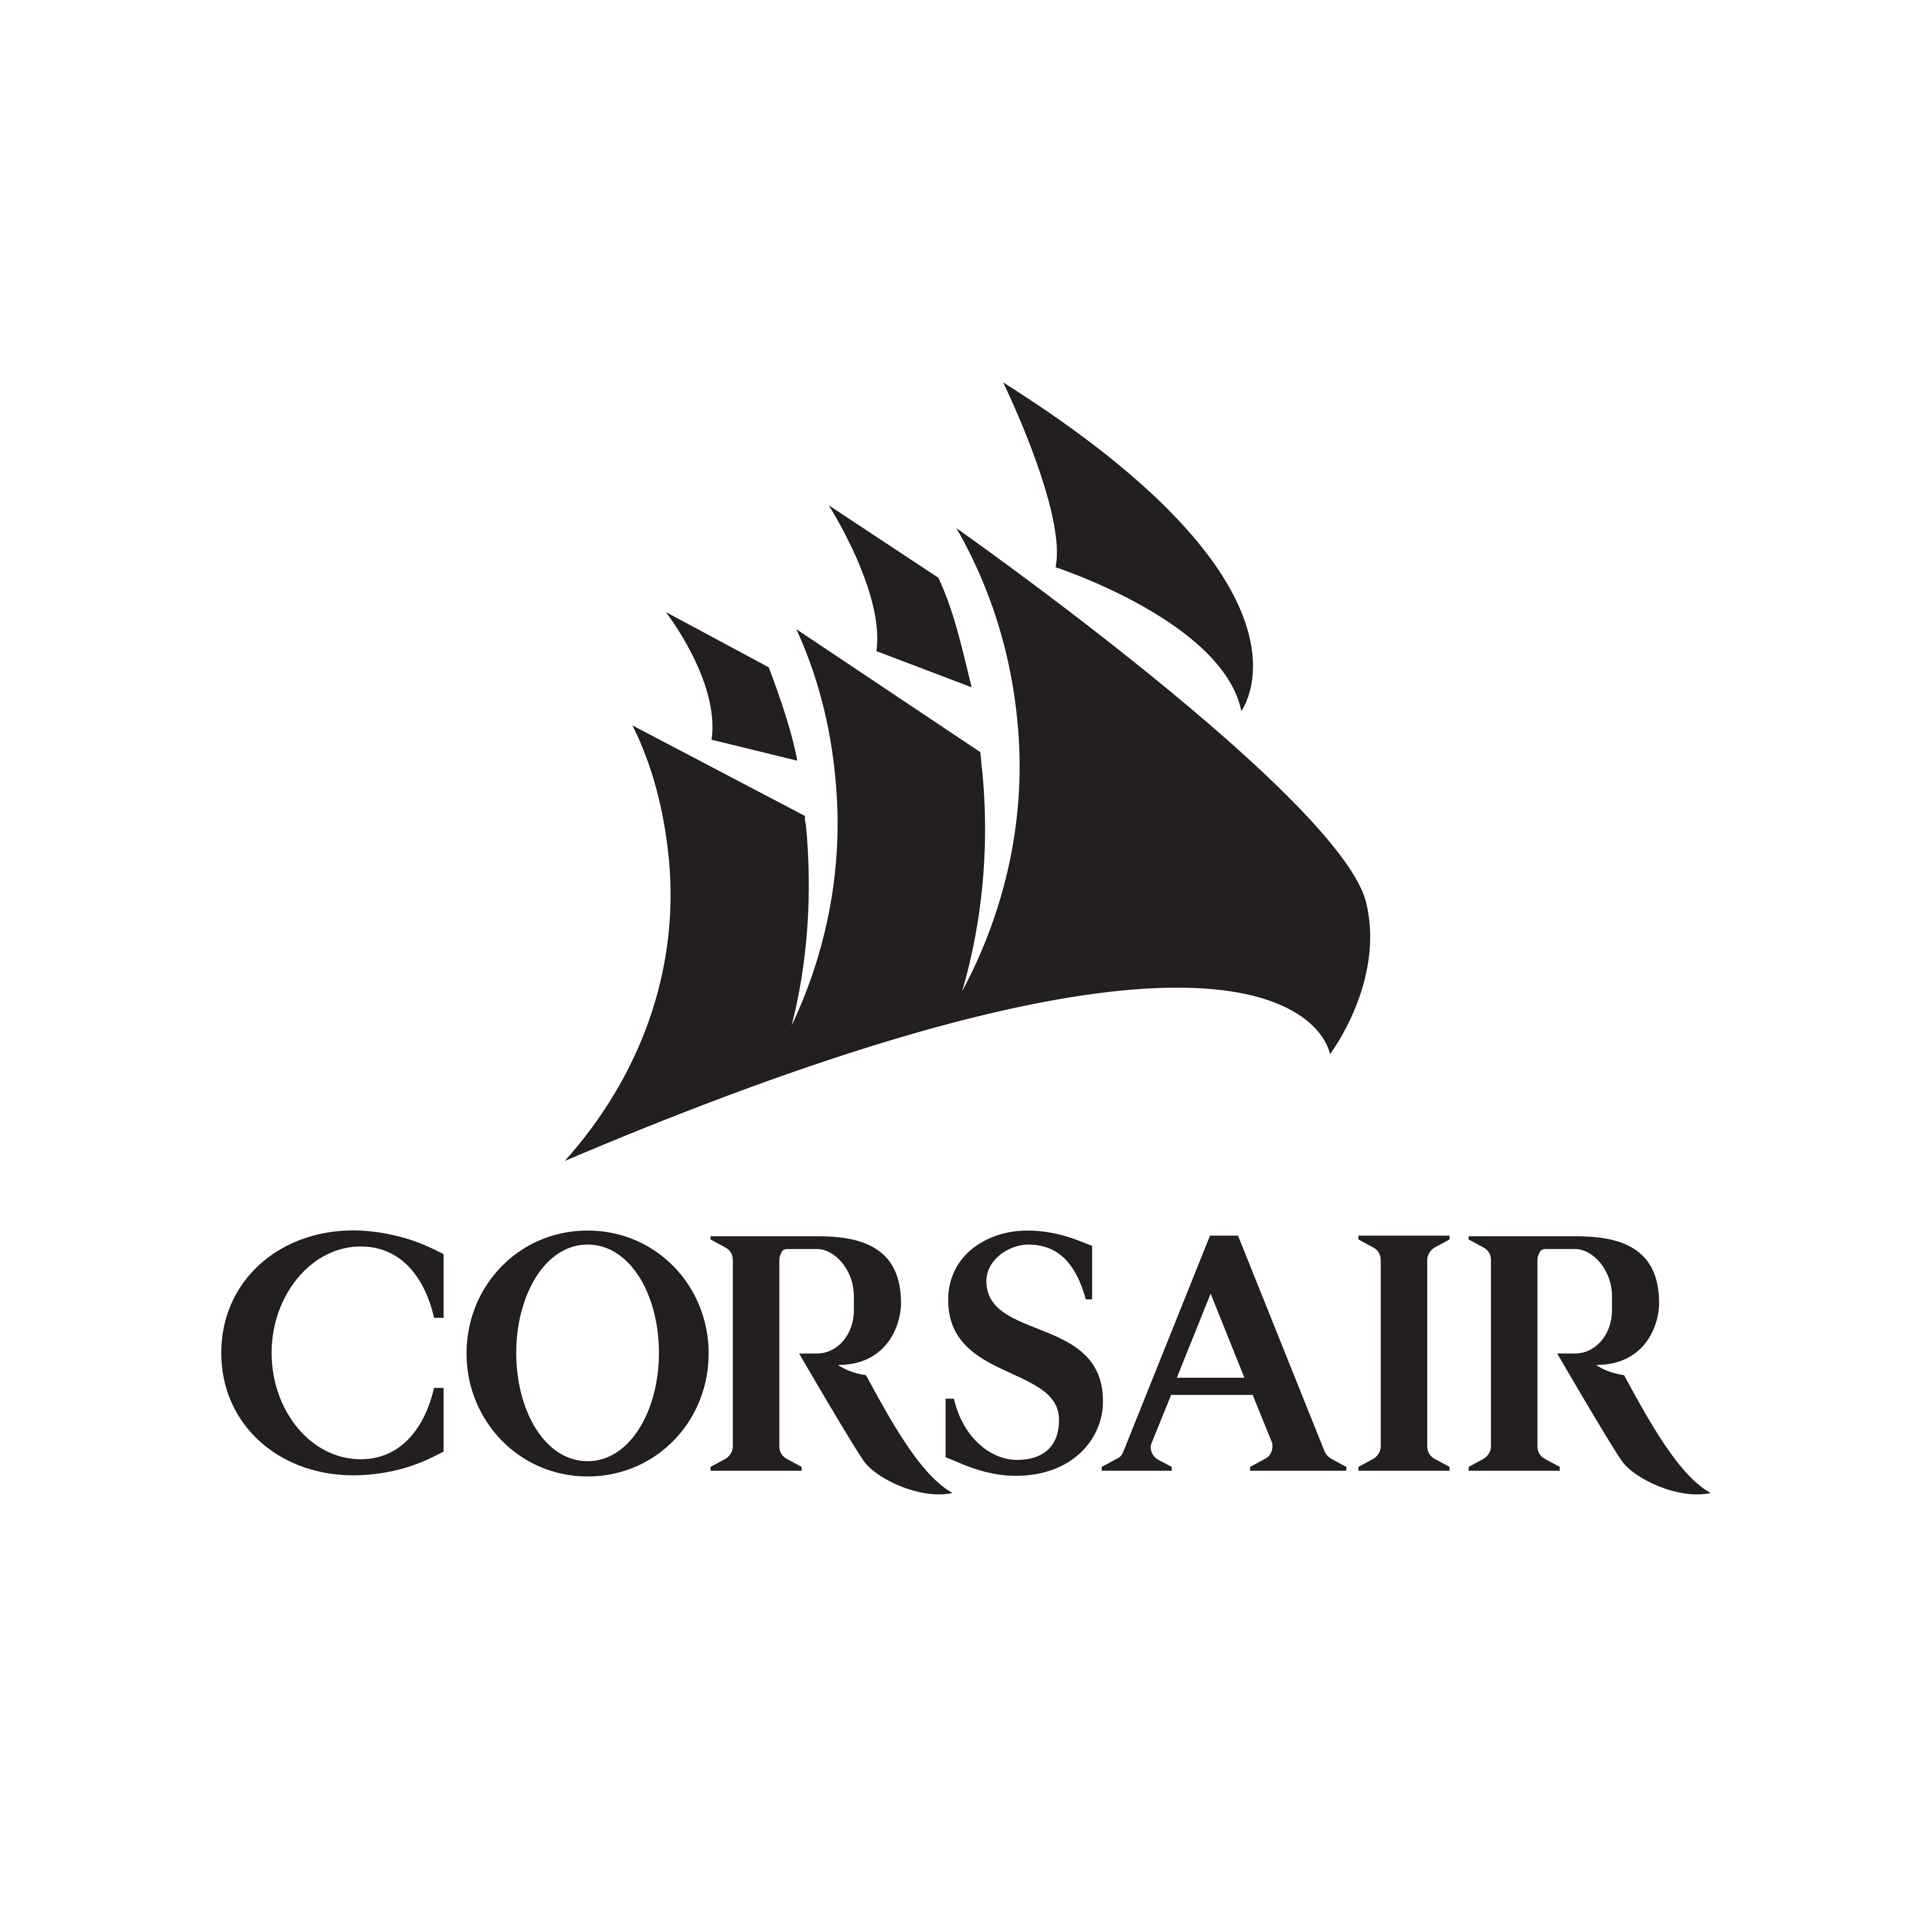 Corsair Transparent Image